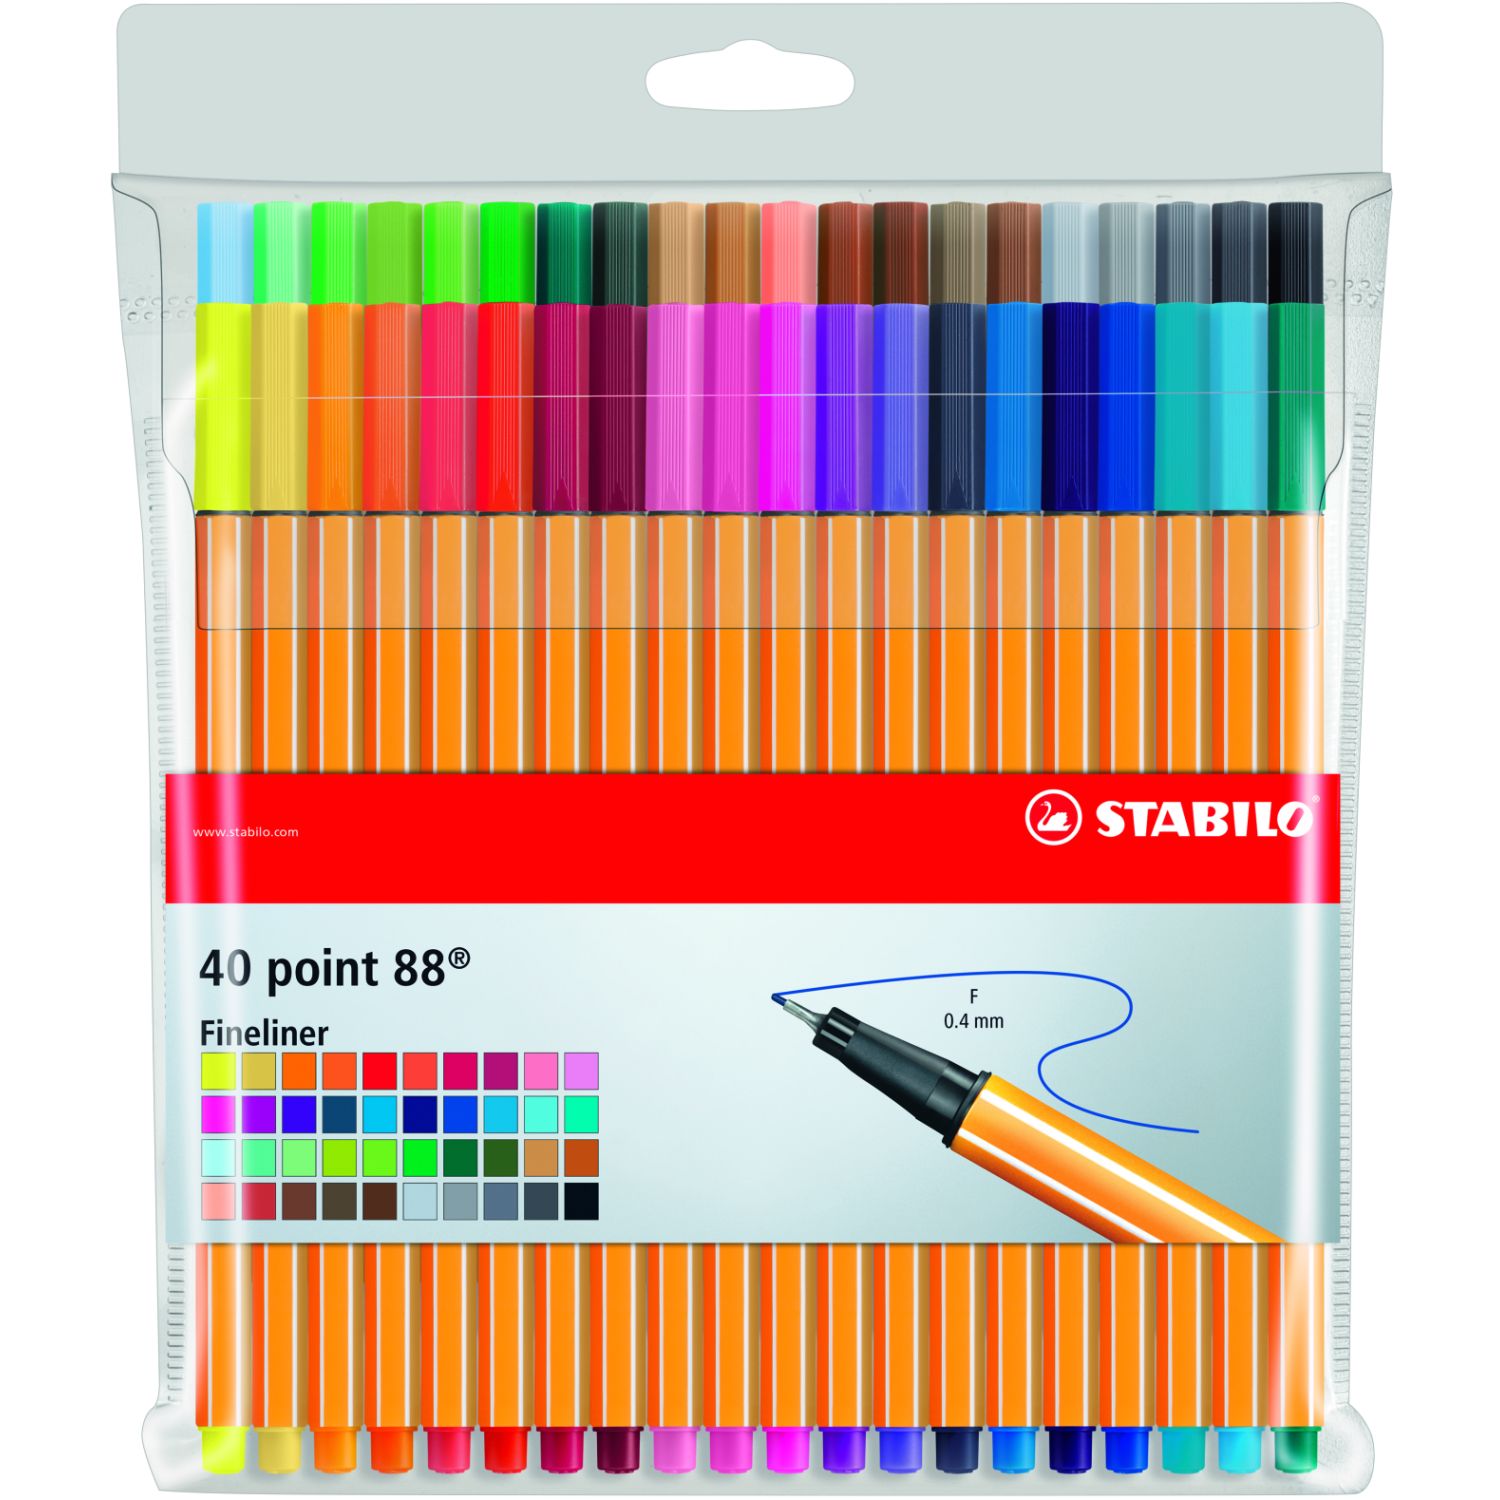 FinePen Point 88 Stabilo x 50 Colores – Partte